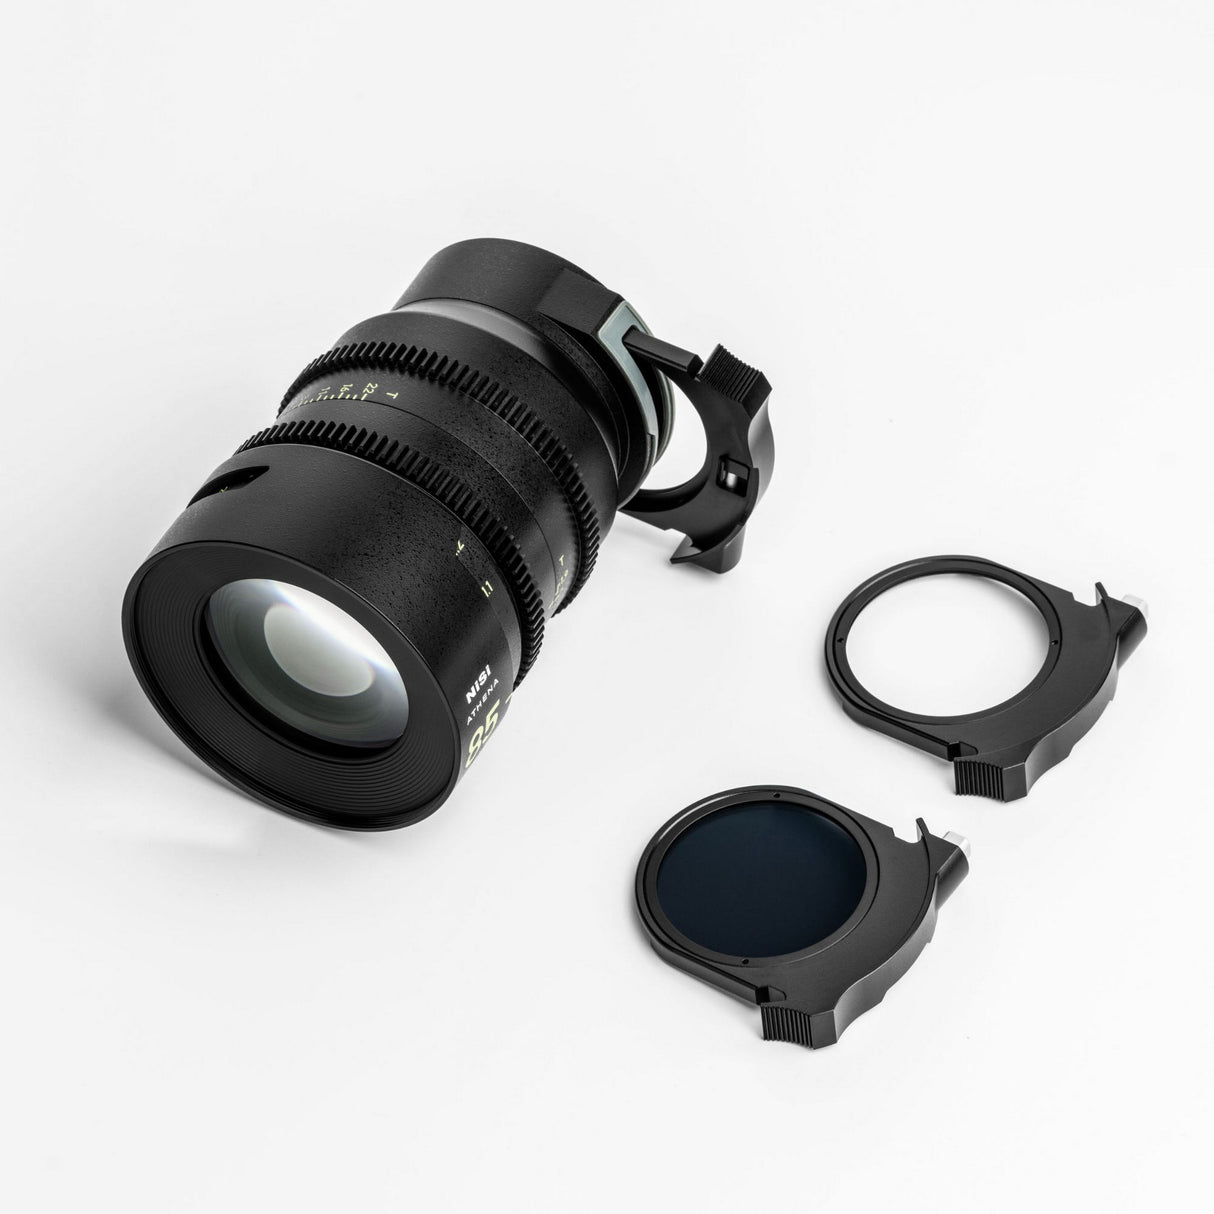 NiSi NIC-ATH-KIT-E ATHENA PRIME Full Frame Cinema Lens Kit, E Mount